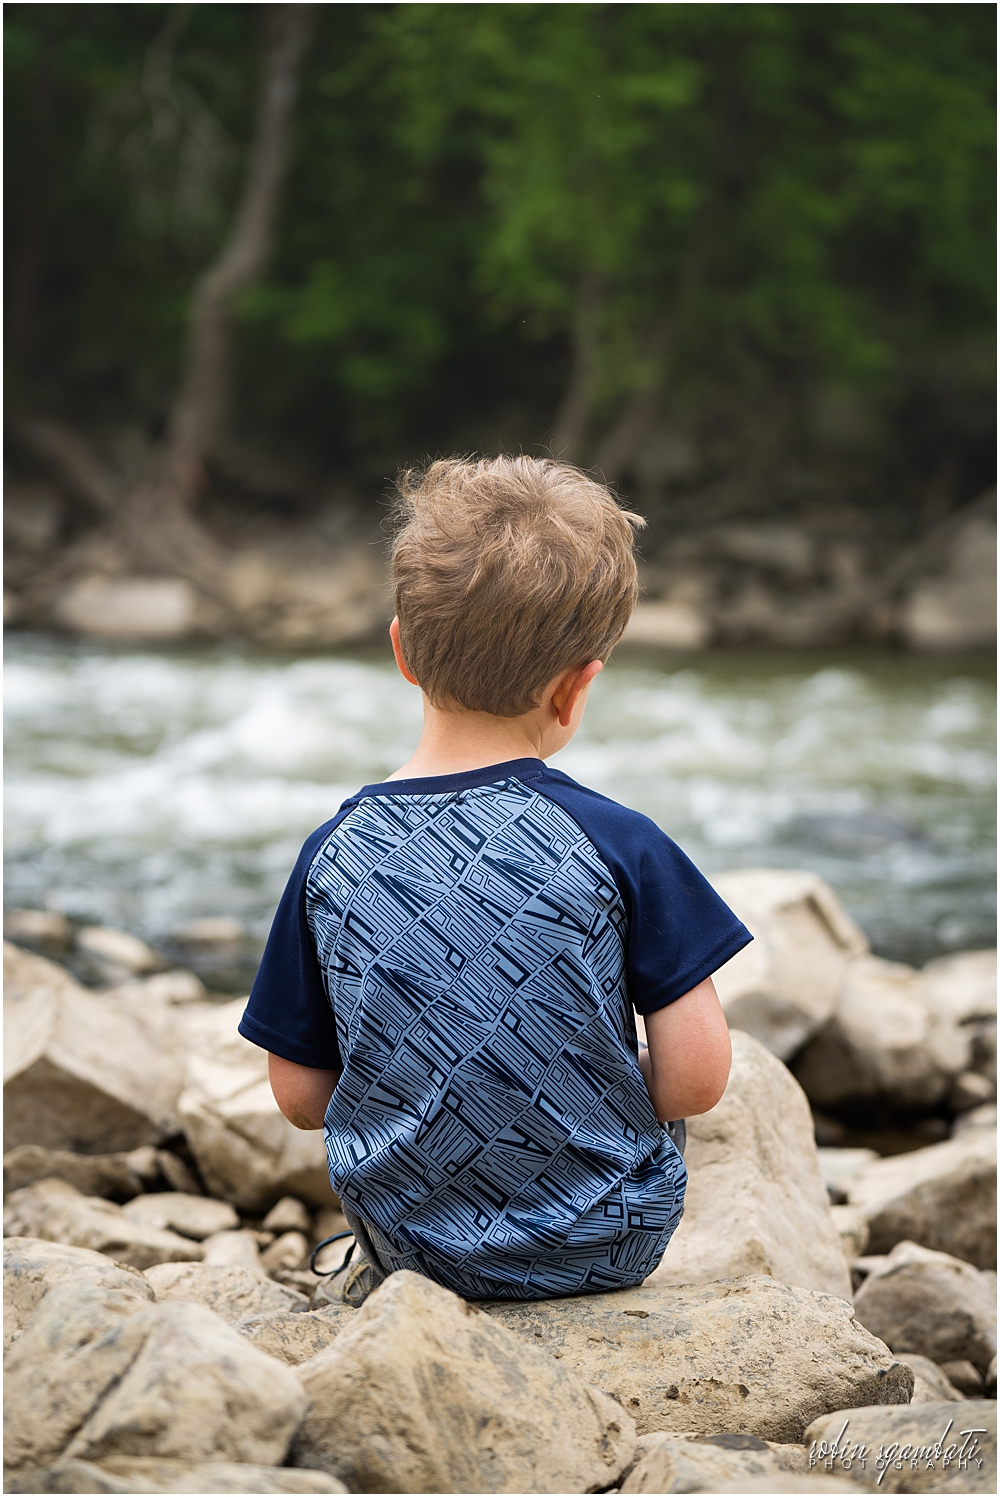 boy playing on rocks by creek